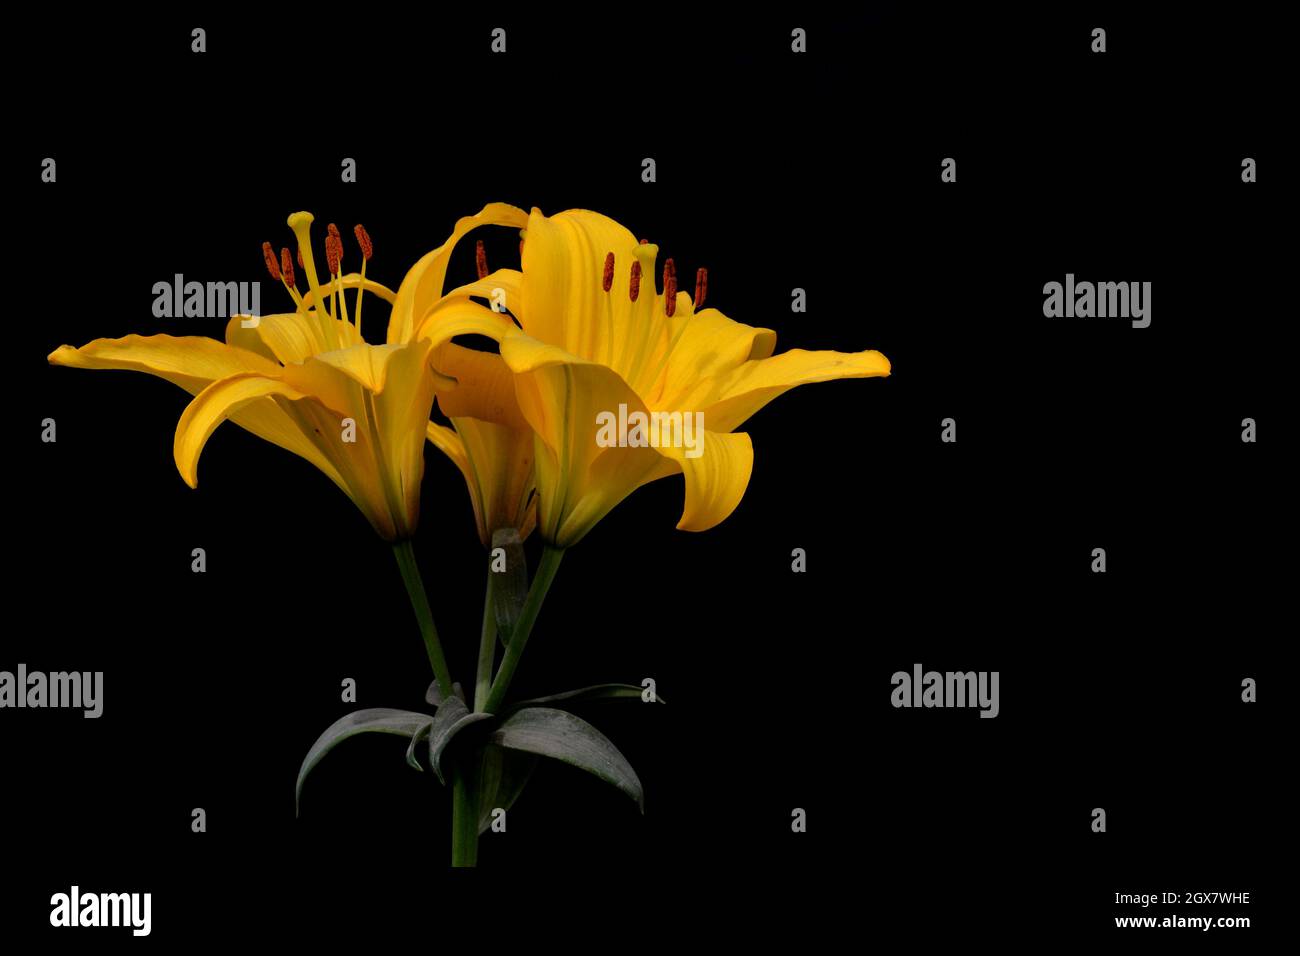 Seasonal flowers photographs Stock Photo